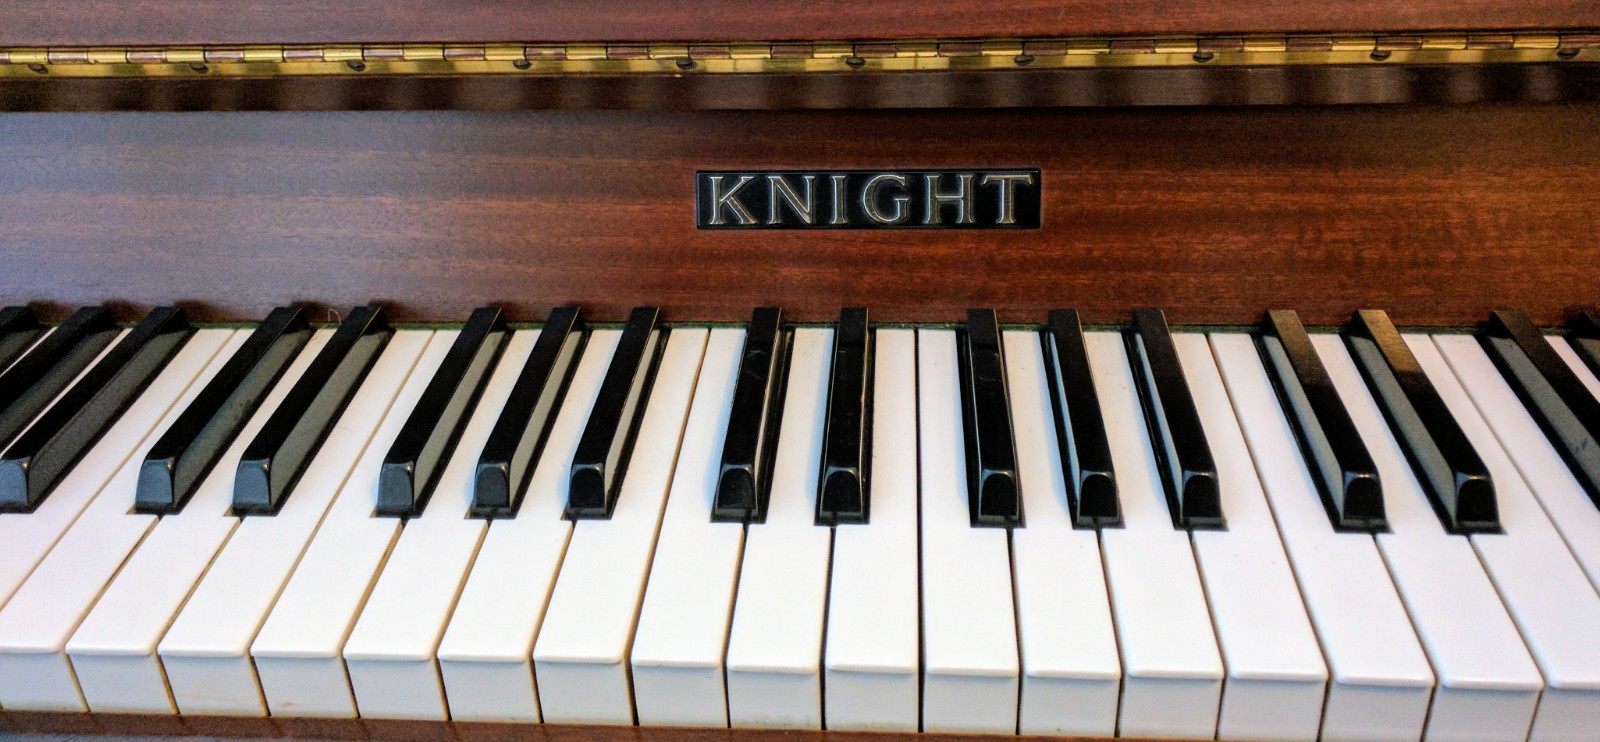 Close up of Keys and Knight K10 trade mark decal